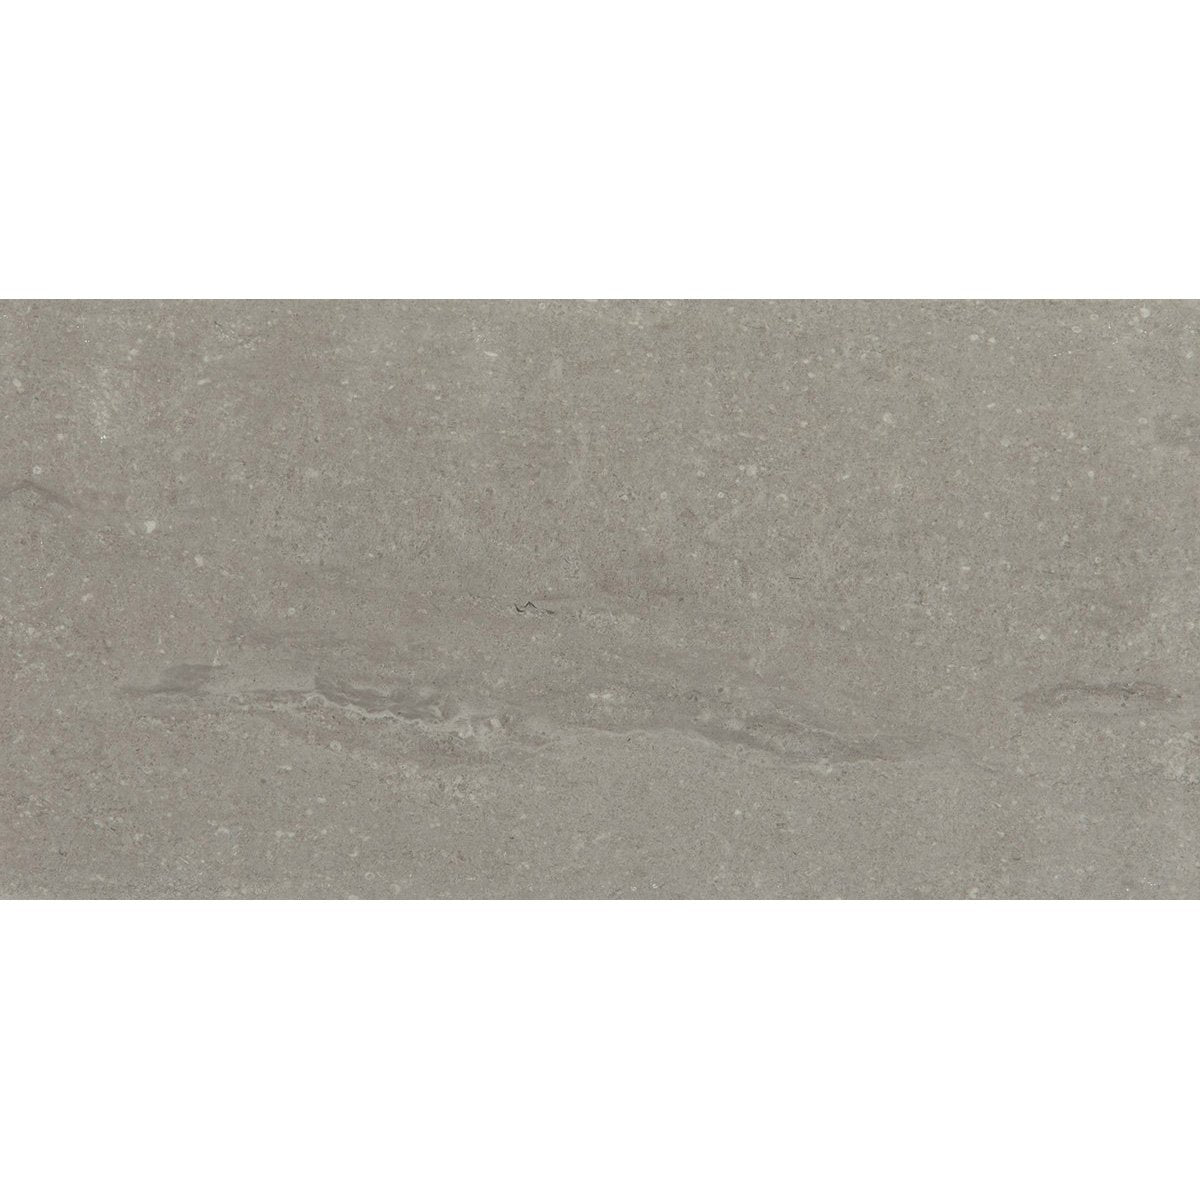 Daltile Raine 3" x 9" Marble Tile - Polished - Cumulus Grey M019